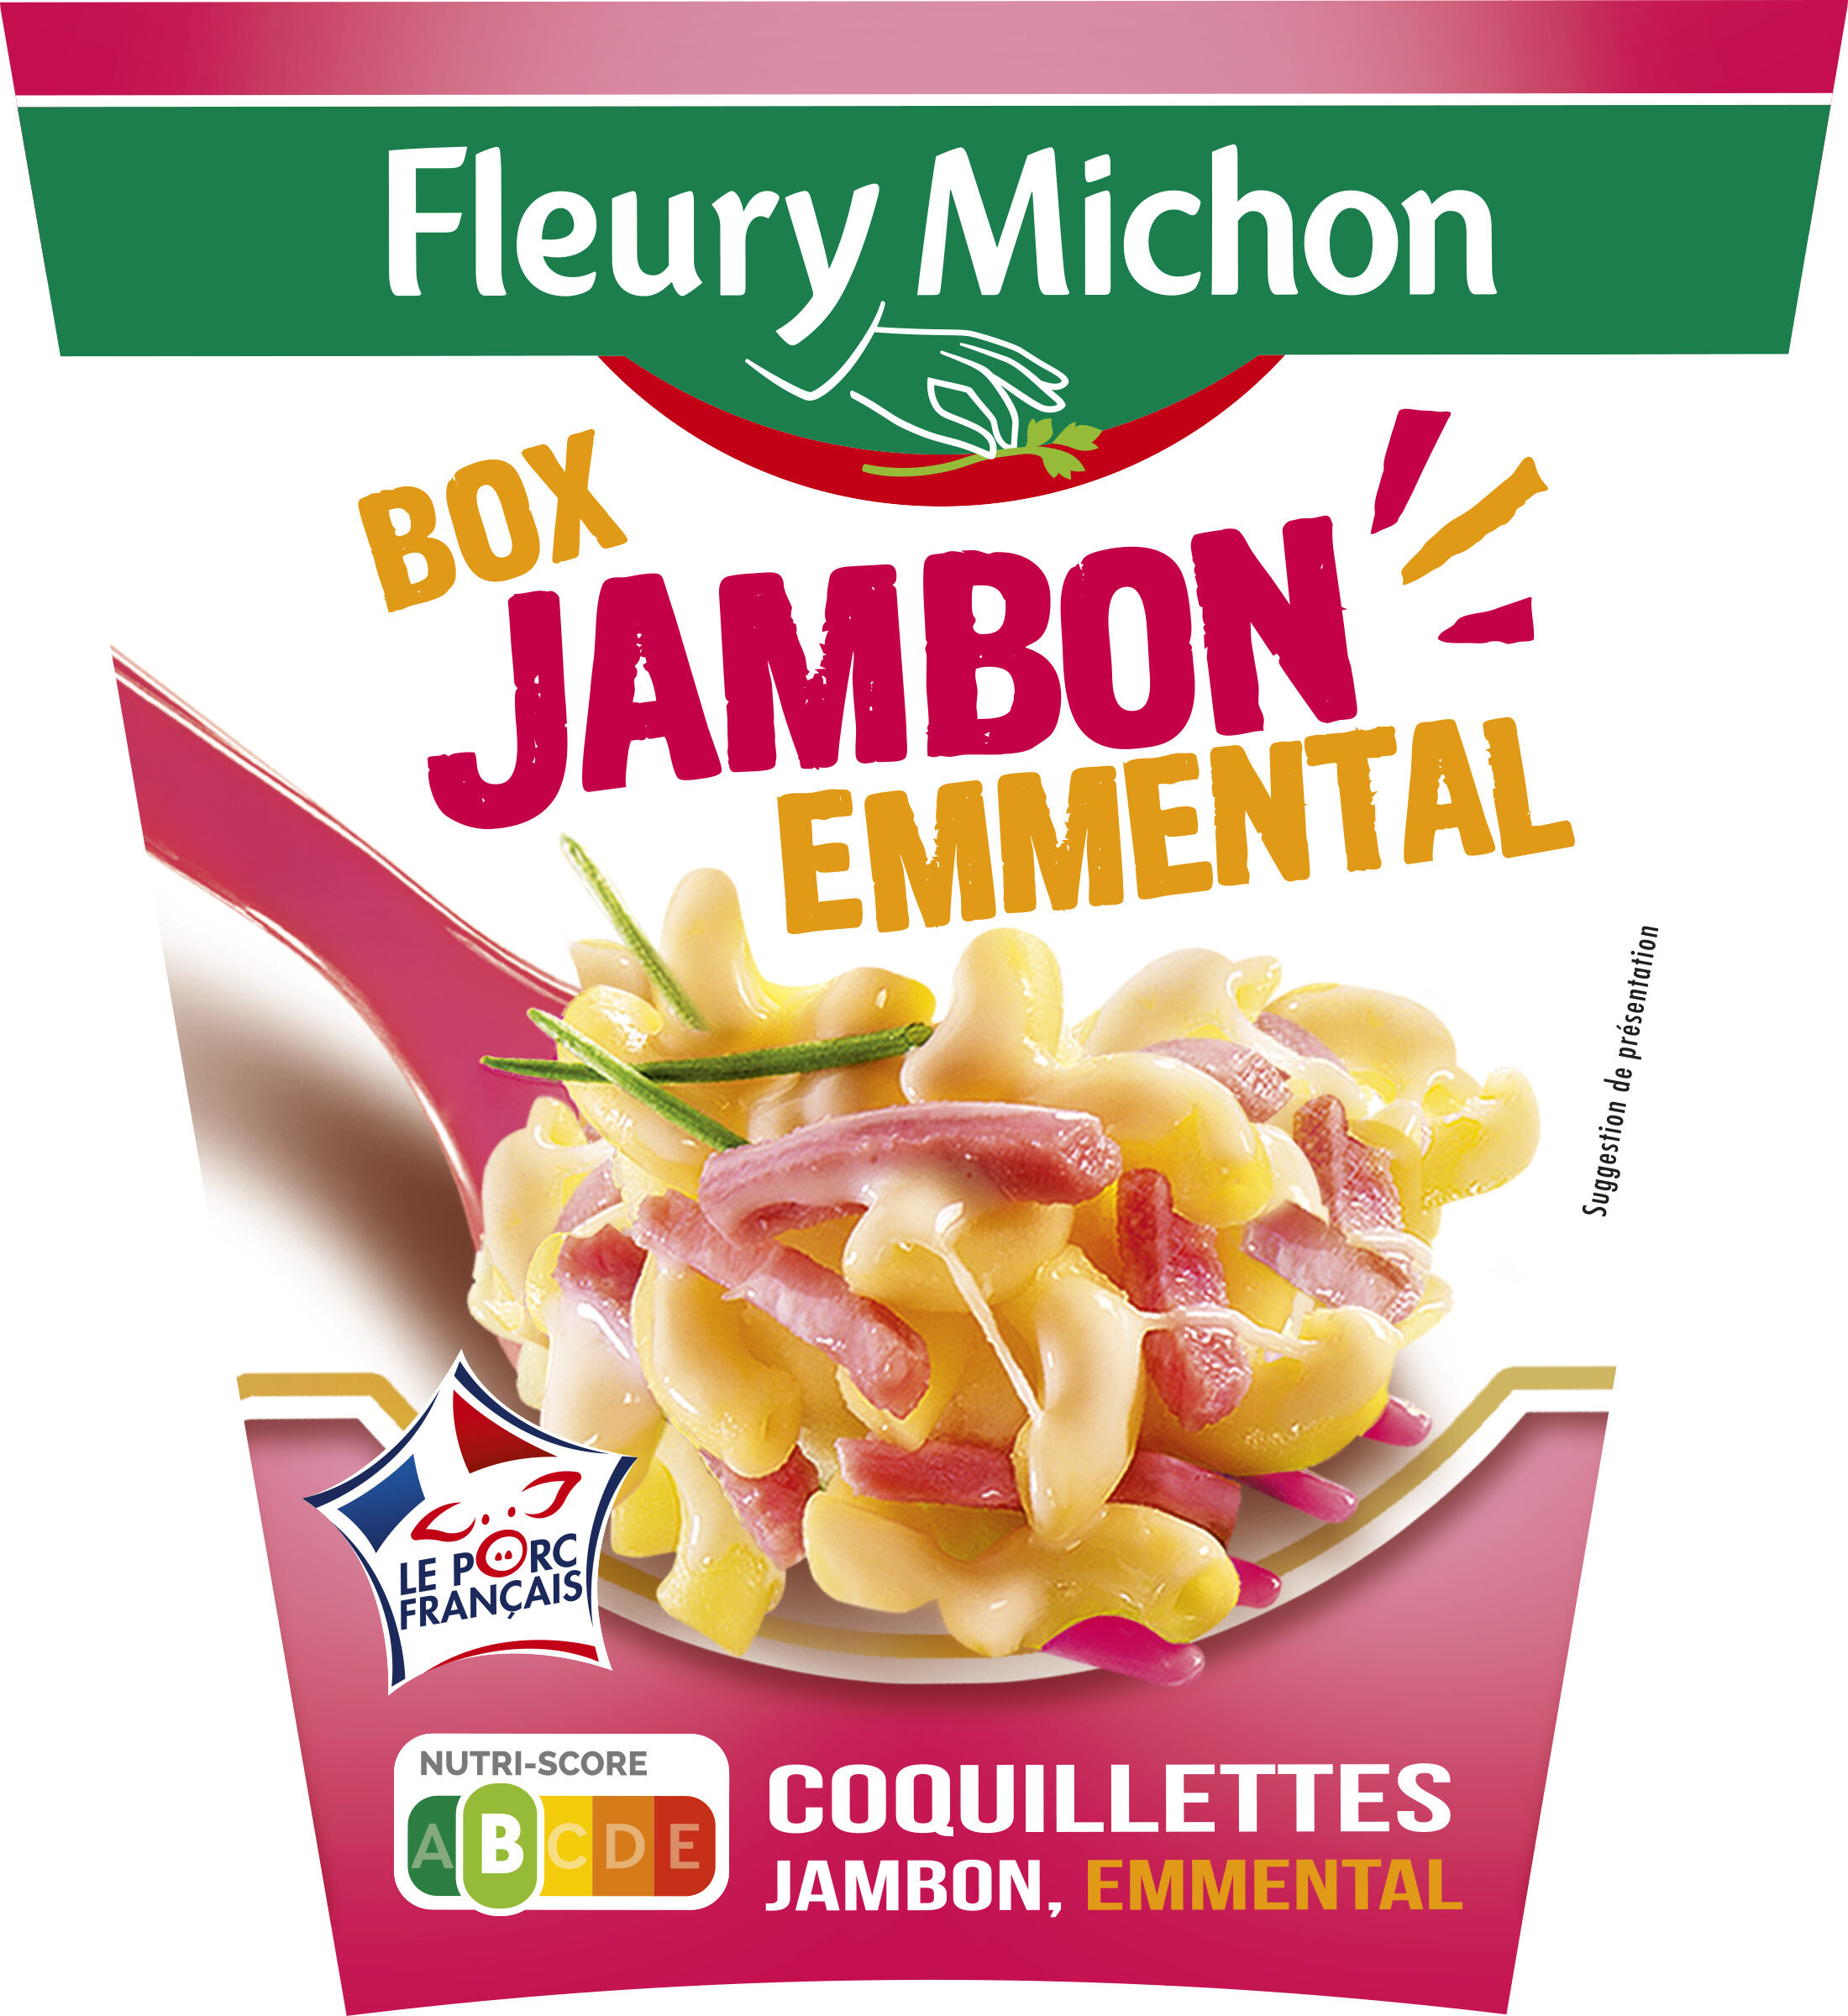 BOX JAMBON EMMENTAL (coquillettes jambon, emmental) - نتاج - fr